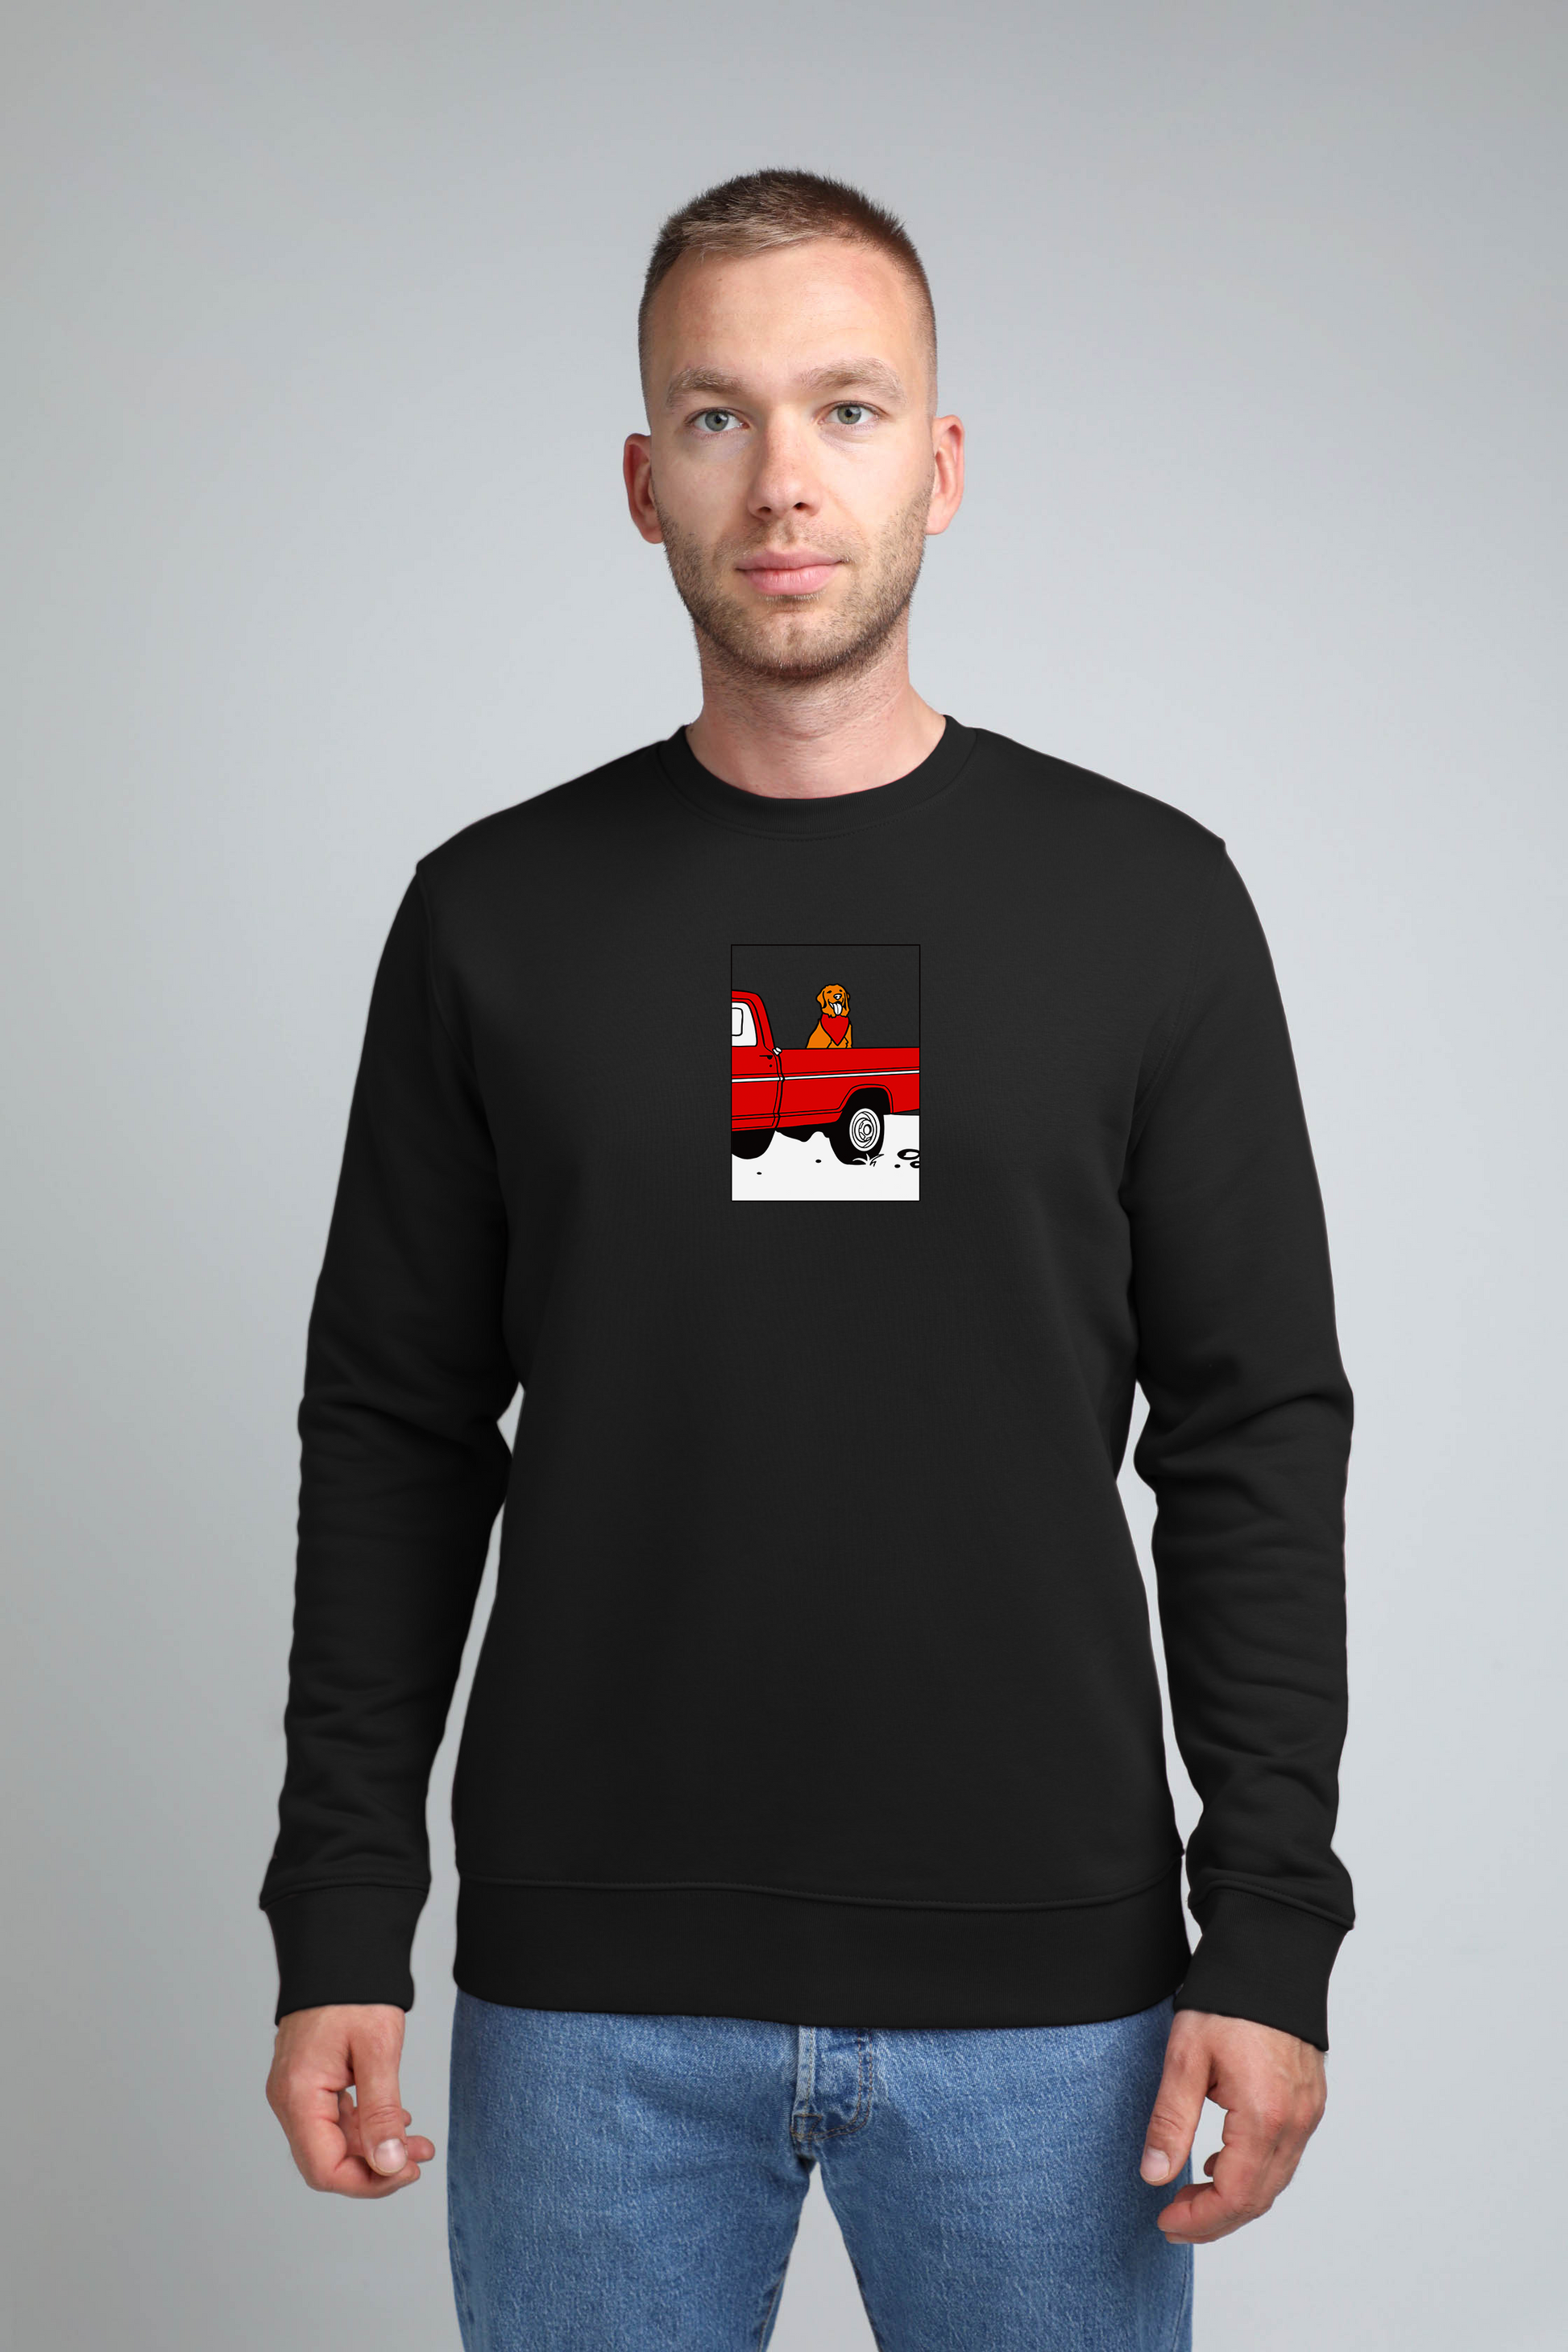 Pickup truck dog | Crew neck sweatshirt with dog. Regular fit | Unisex by My Wild Other